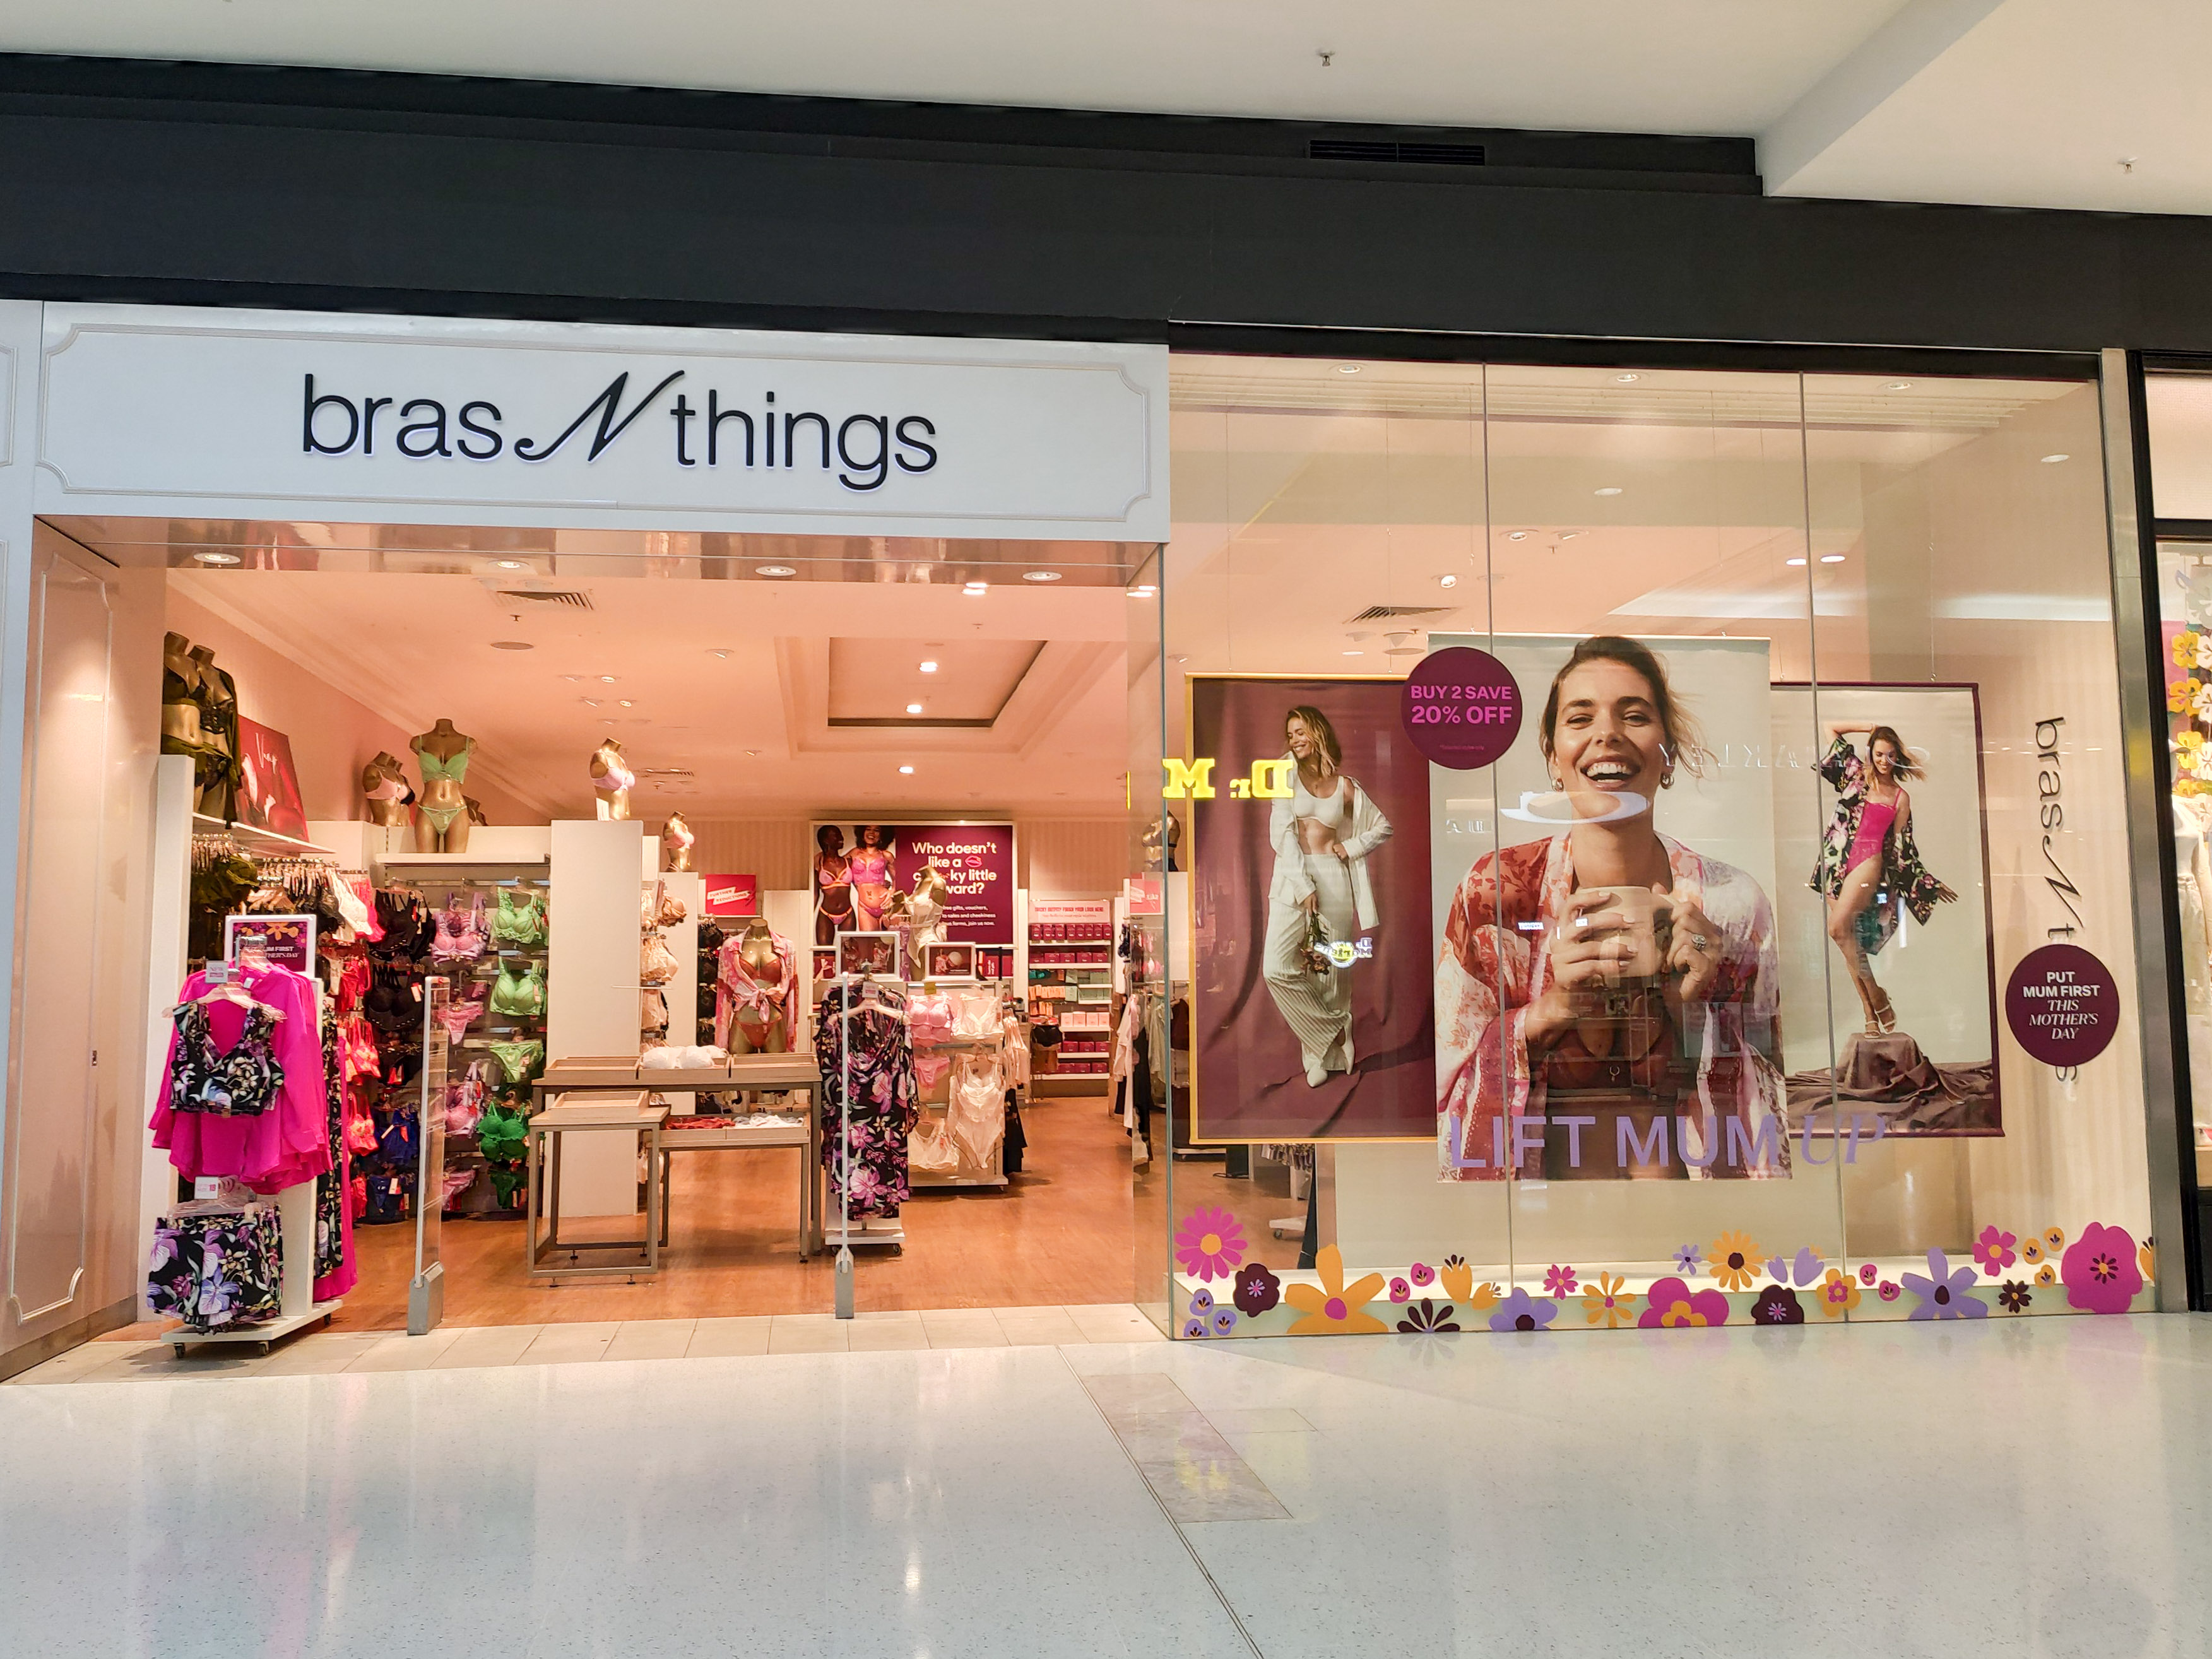 Bras - Saving Shop – Saving shop